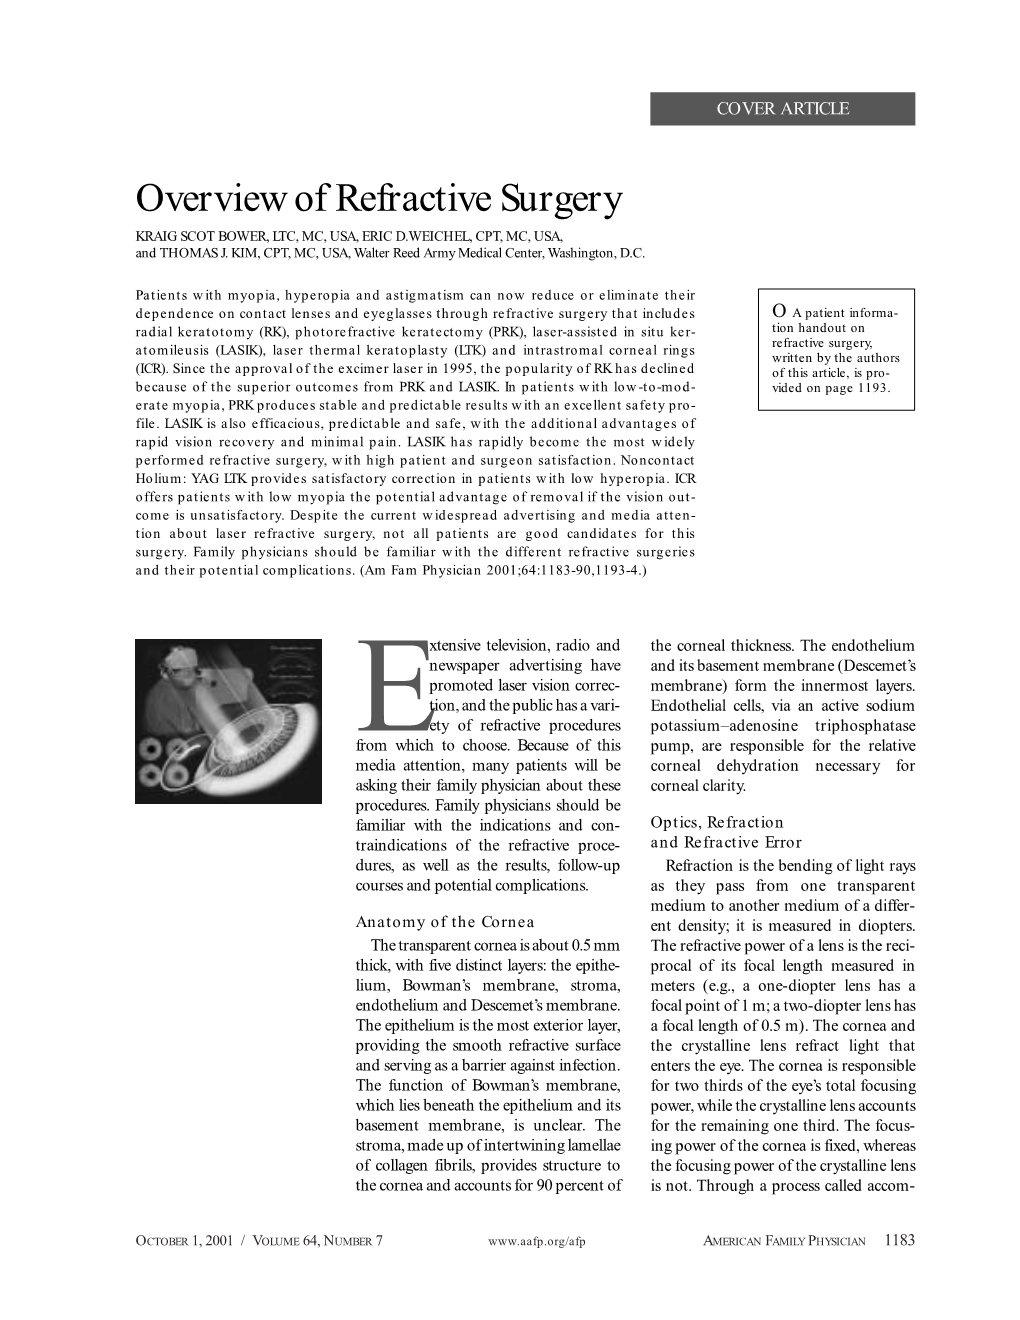 Overview of Refractive Surgery KRAIG SCOT BOWER, LTC, MC, USA, ERIC D.WEICHEL, CPT, MC, USA, and THOMAS J